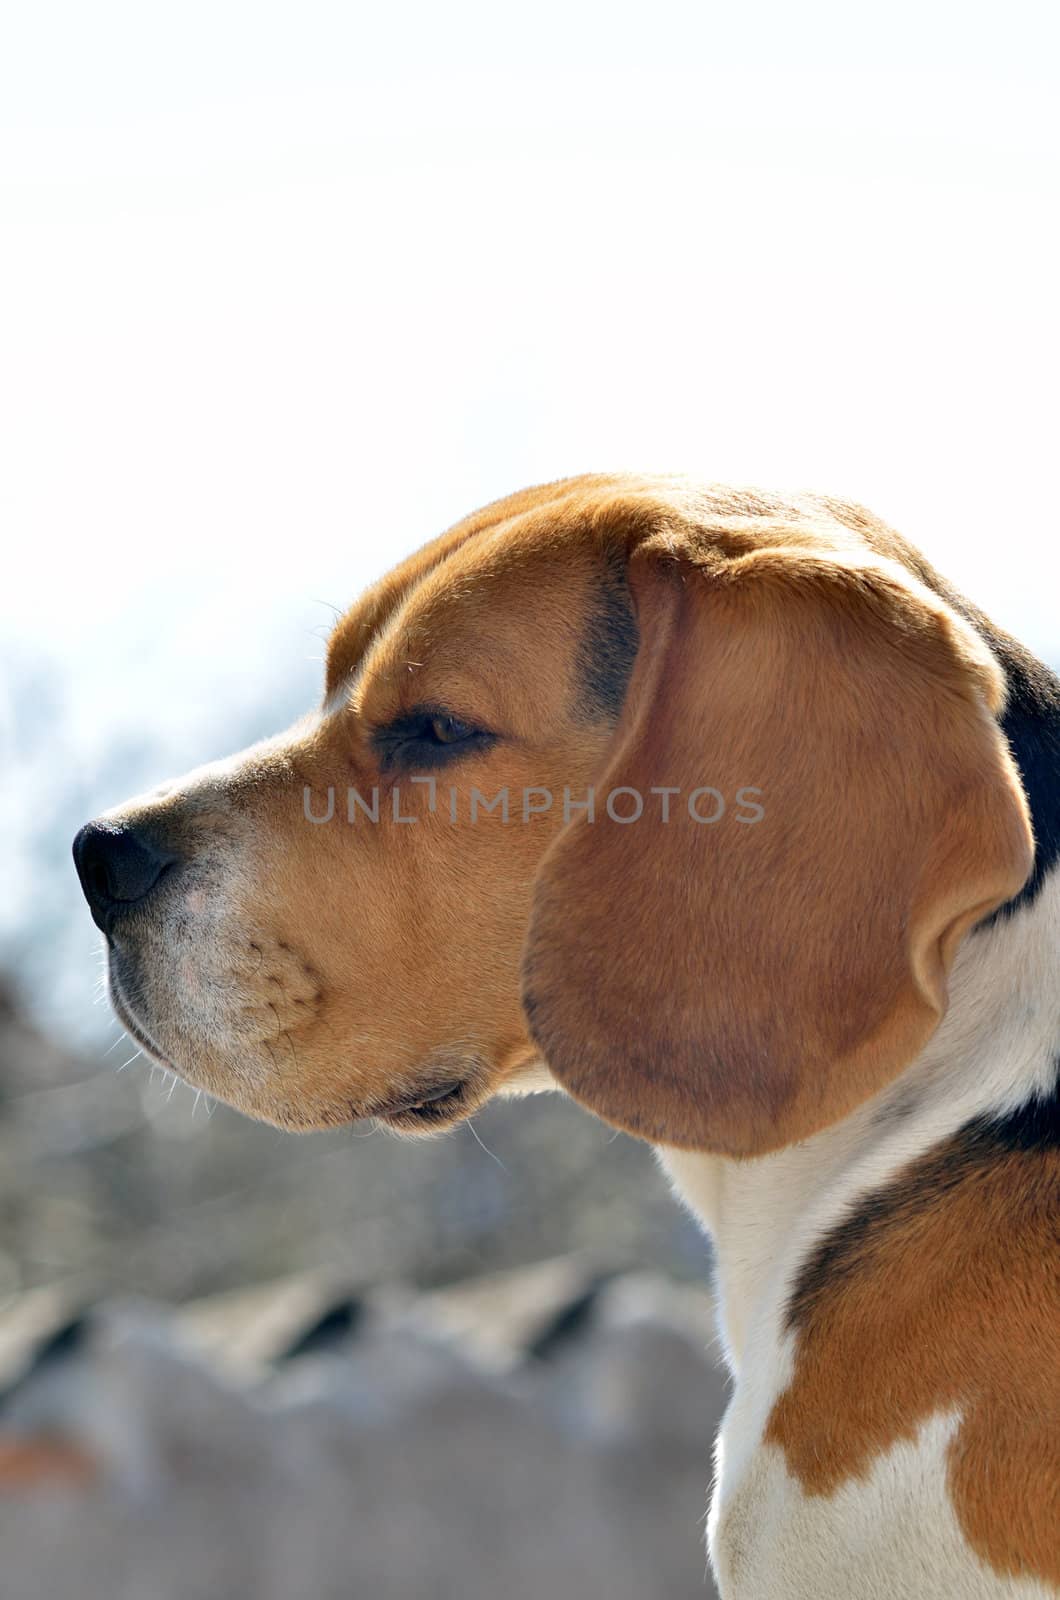 Close up of a Beagle